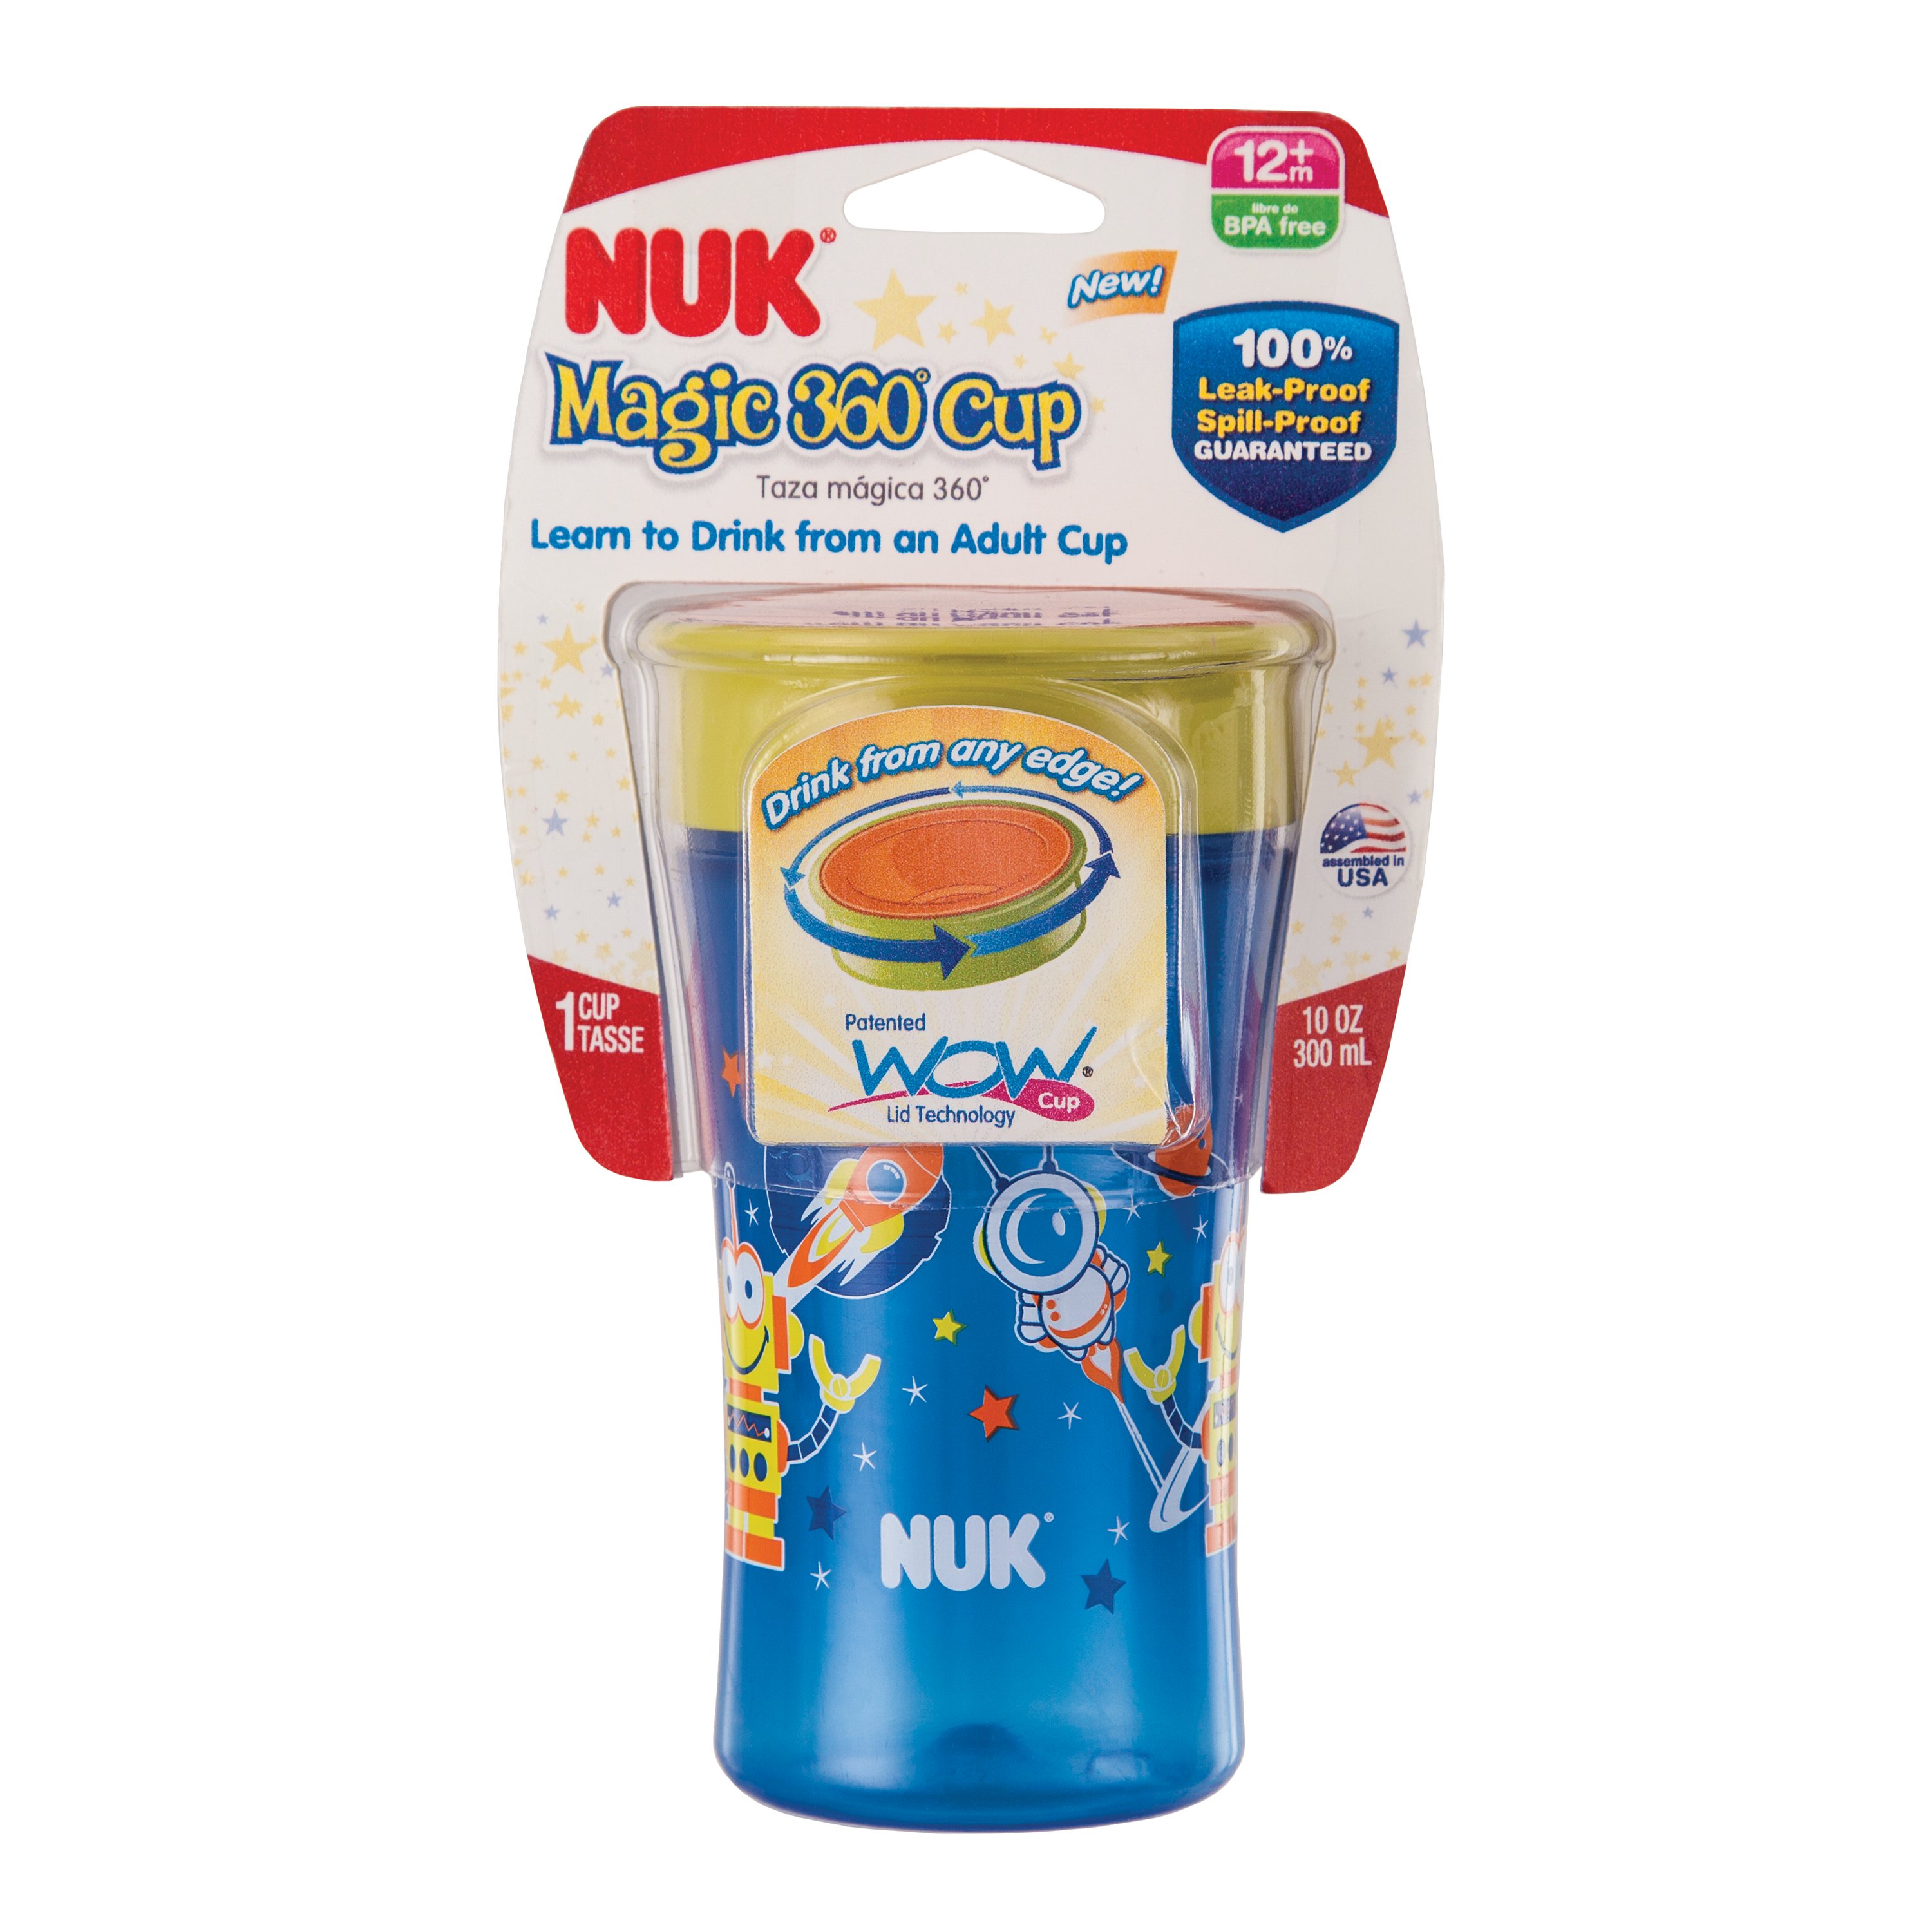 NUK Magic 360 Cup, 12+ Months, Assorted Colors - Shop Cups at H-E-B